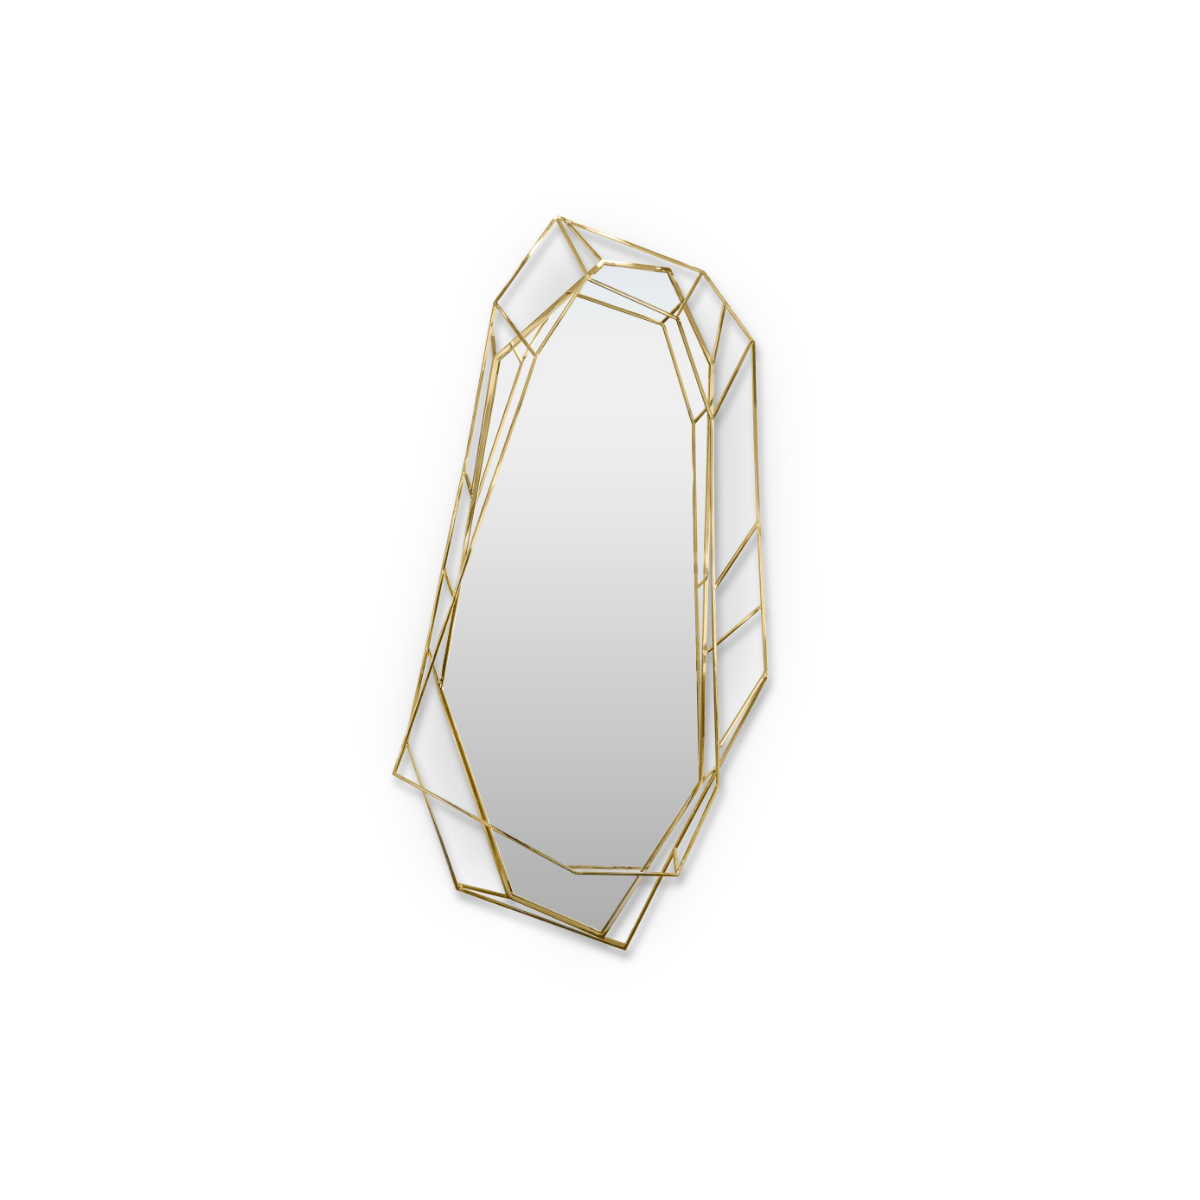 diamond big mirror essential home 01 iSaloni 2018